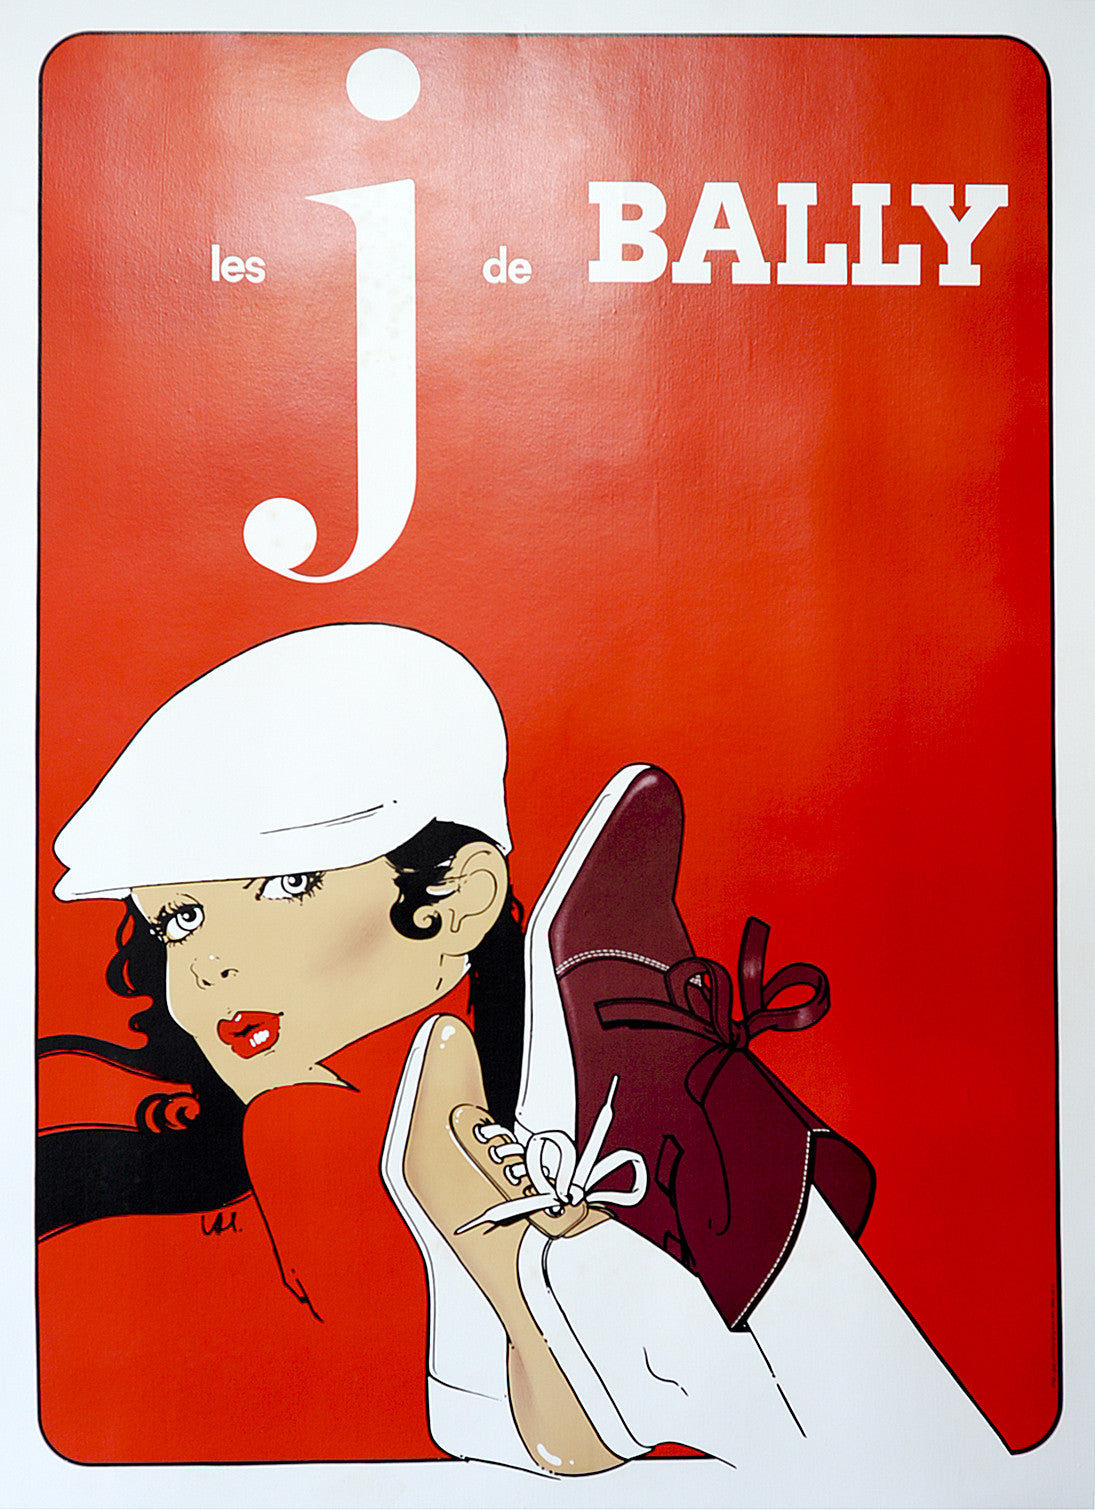 Les J de Bally by Villemot